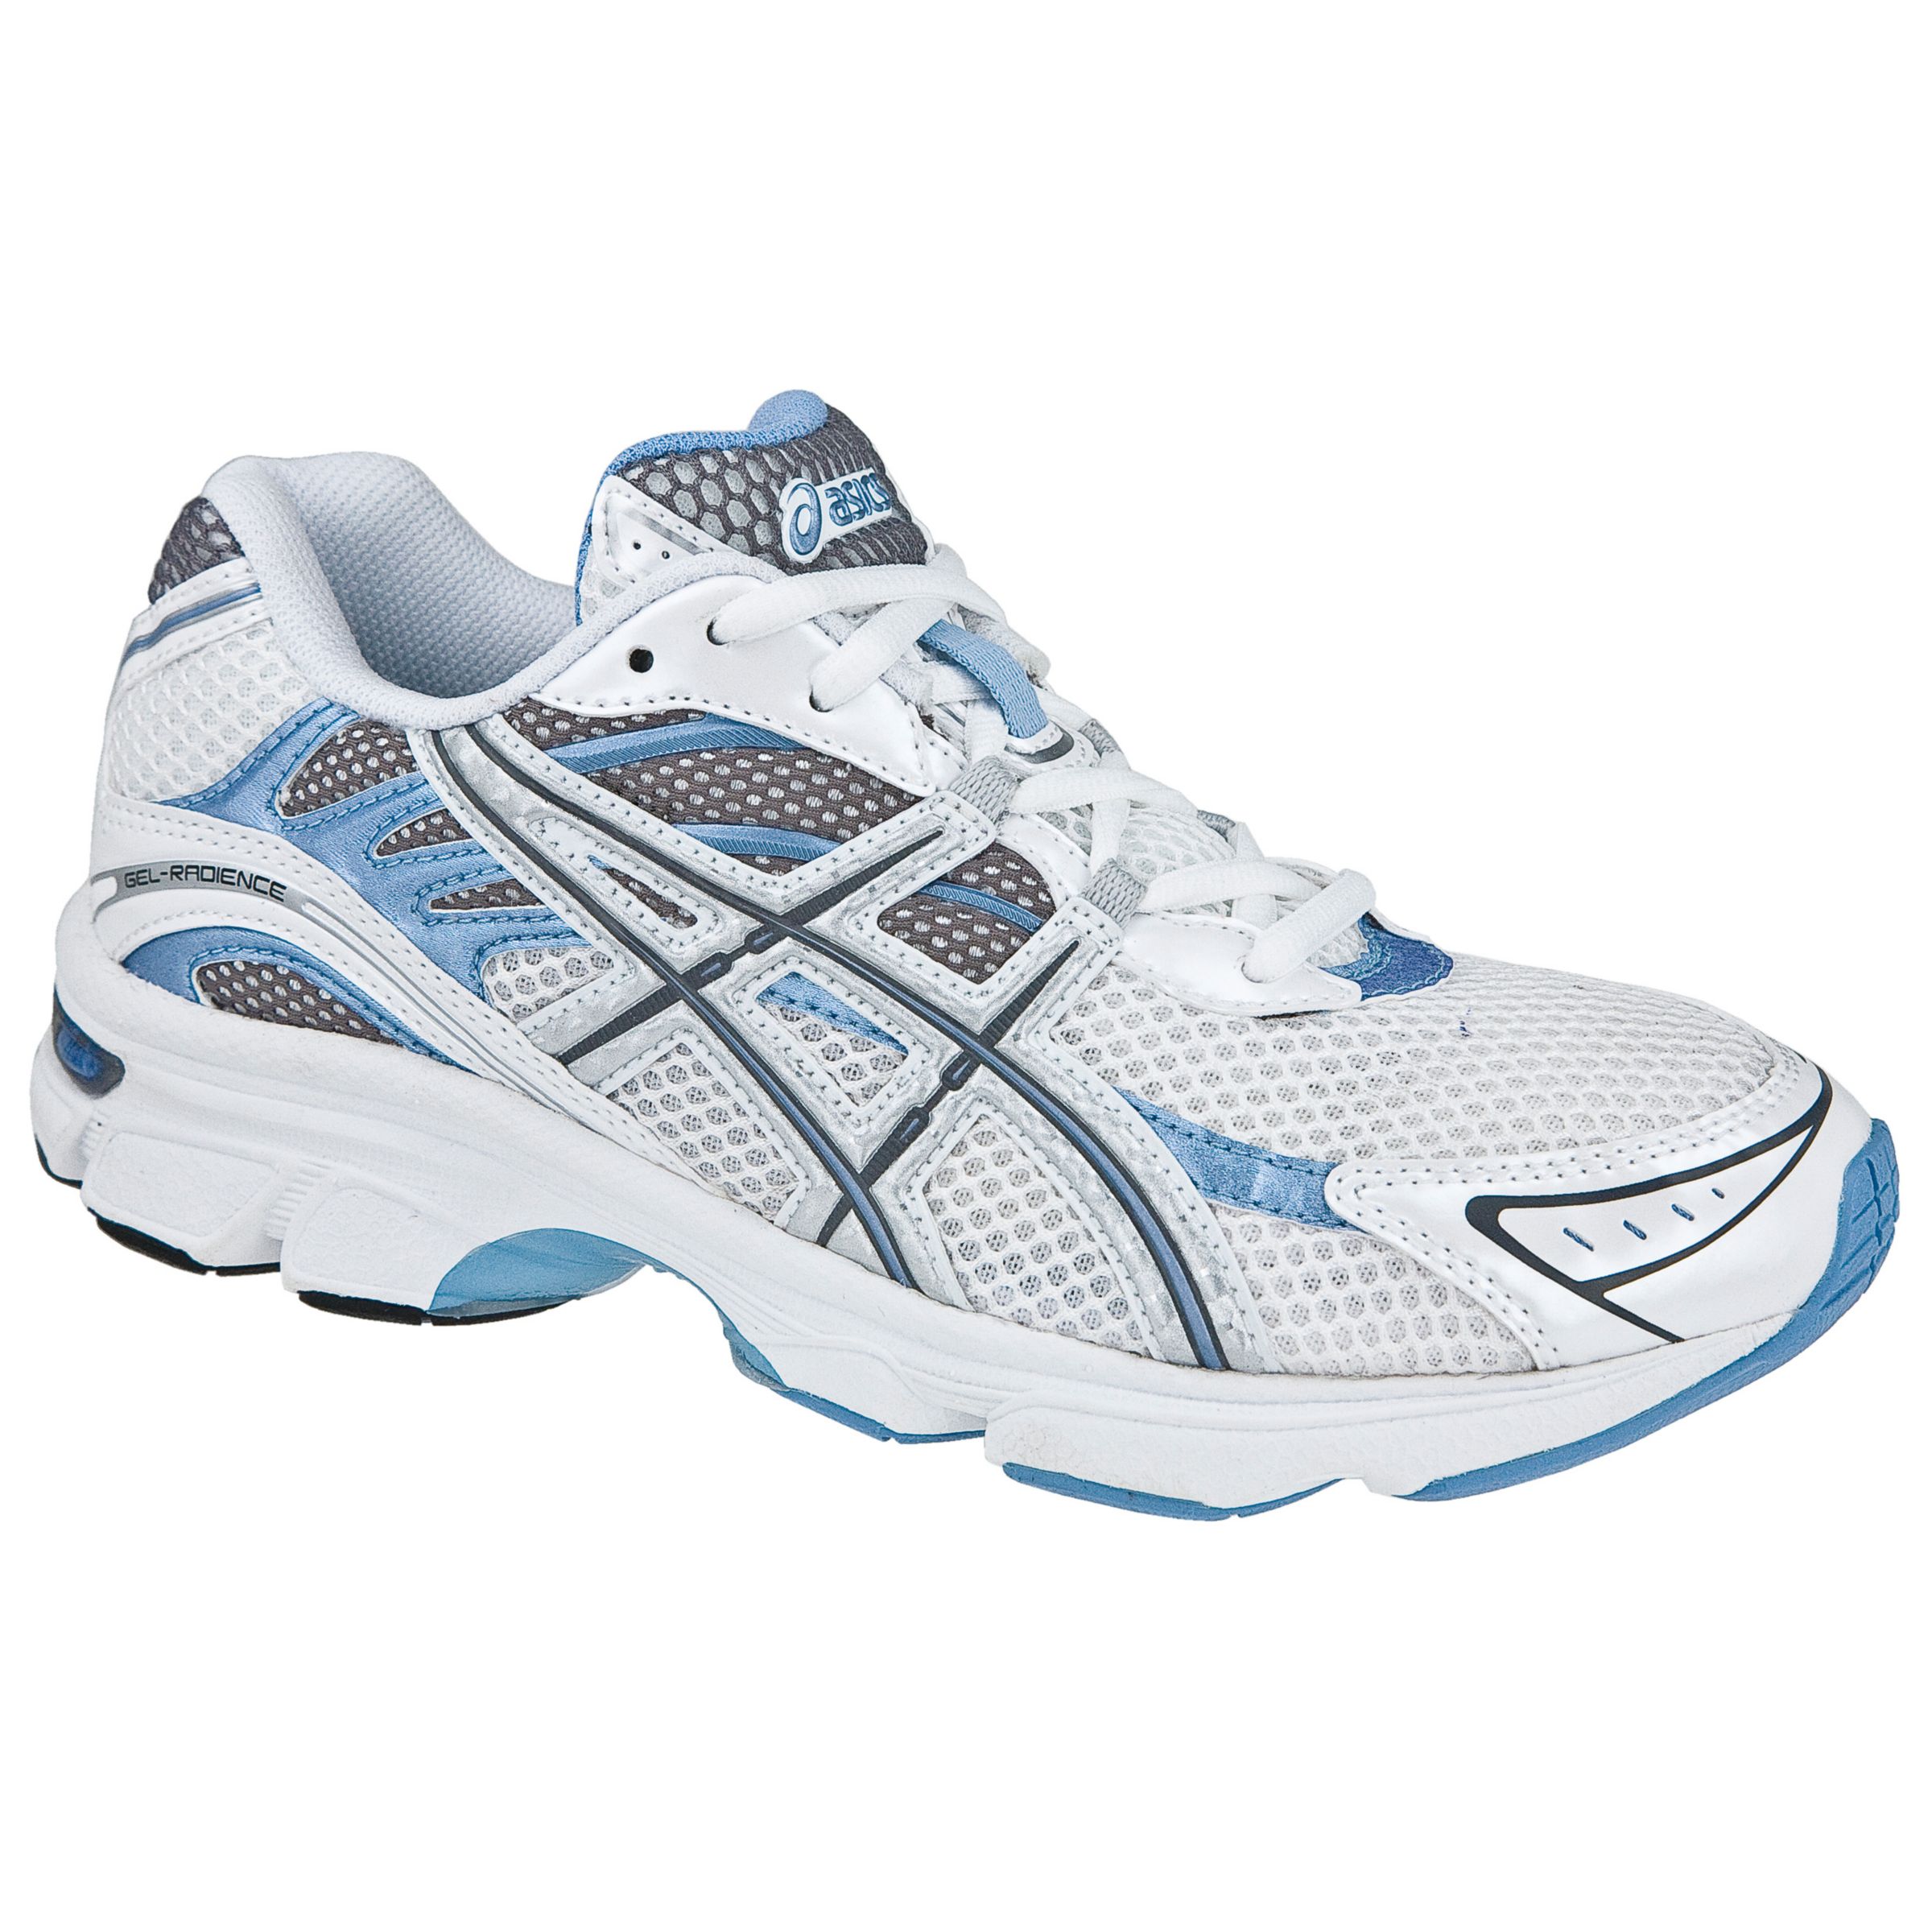 Asics Gel Radience 4 Running Shoes, White/Lilac